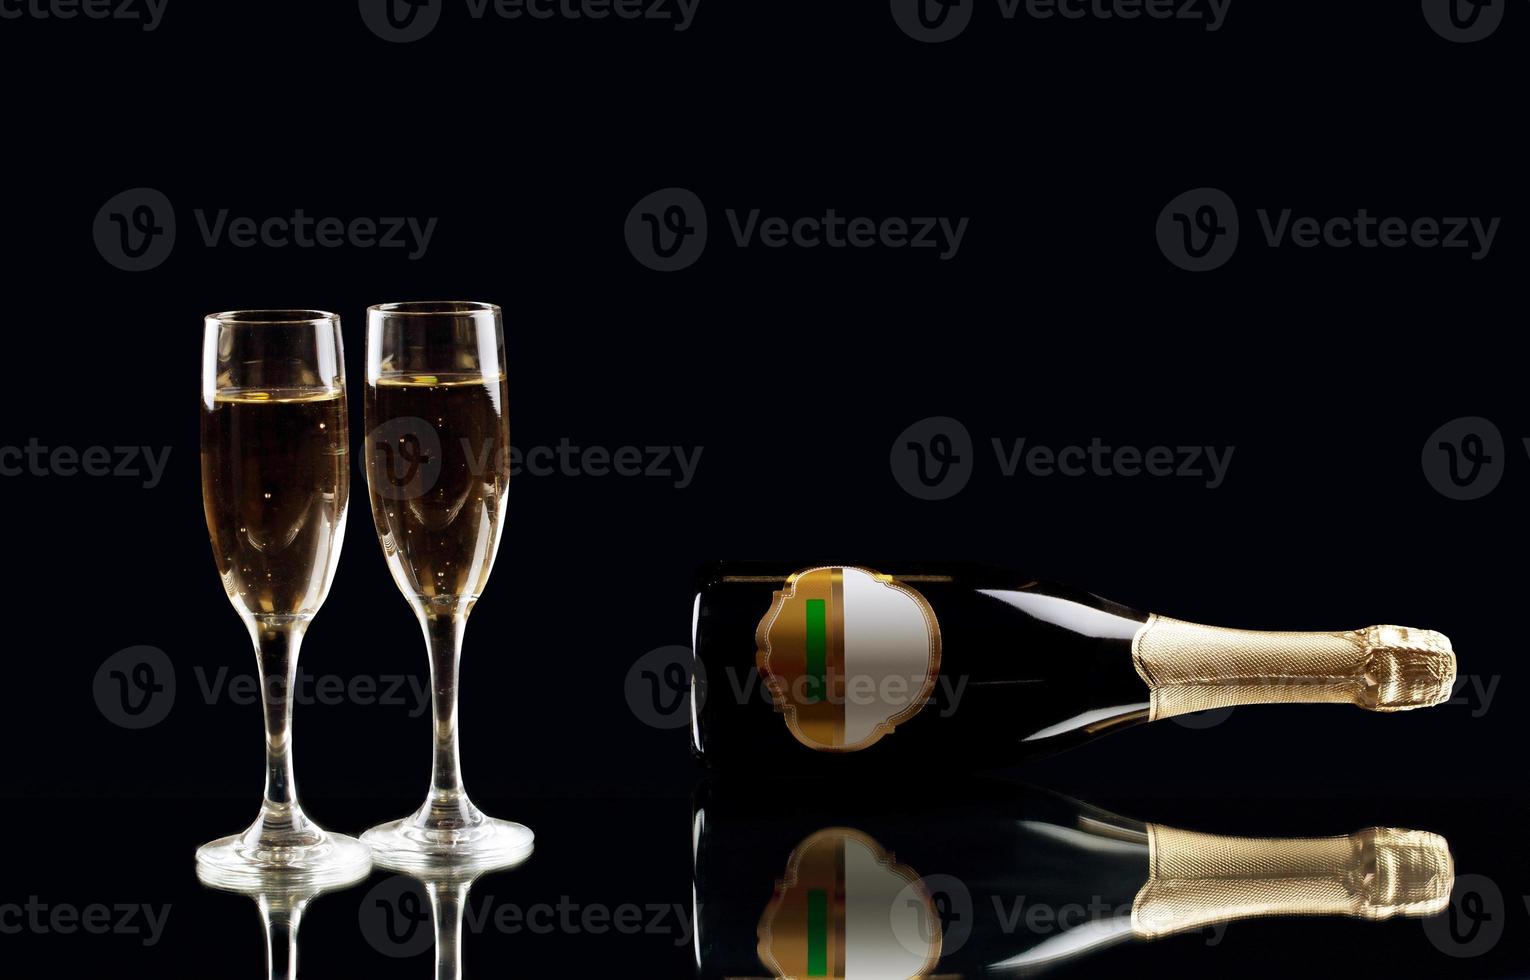 Fondo de celebración de nochevieja con champán foto